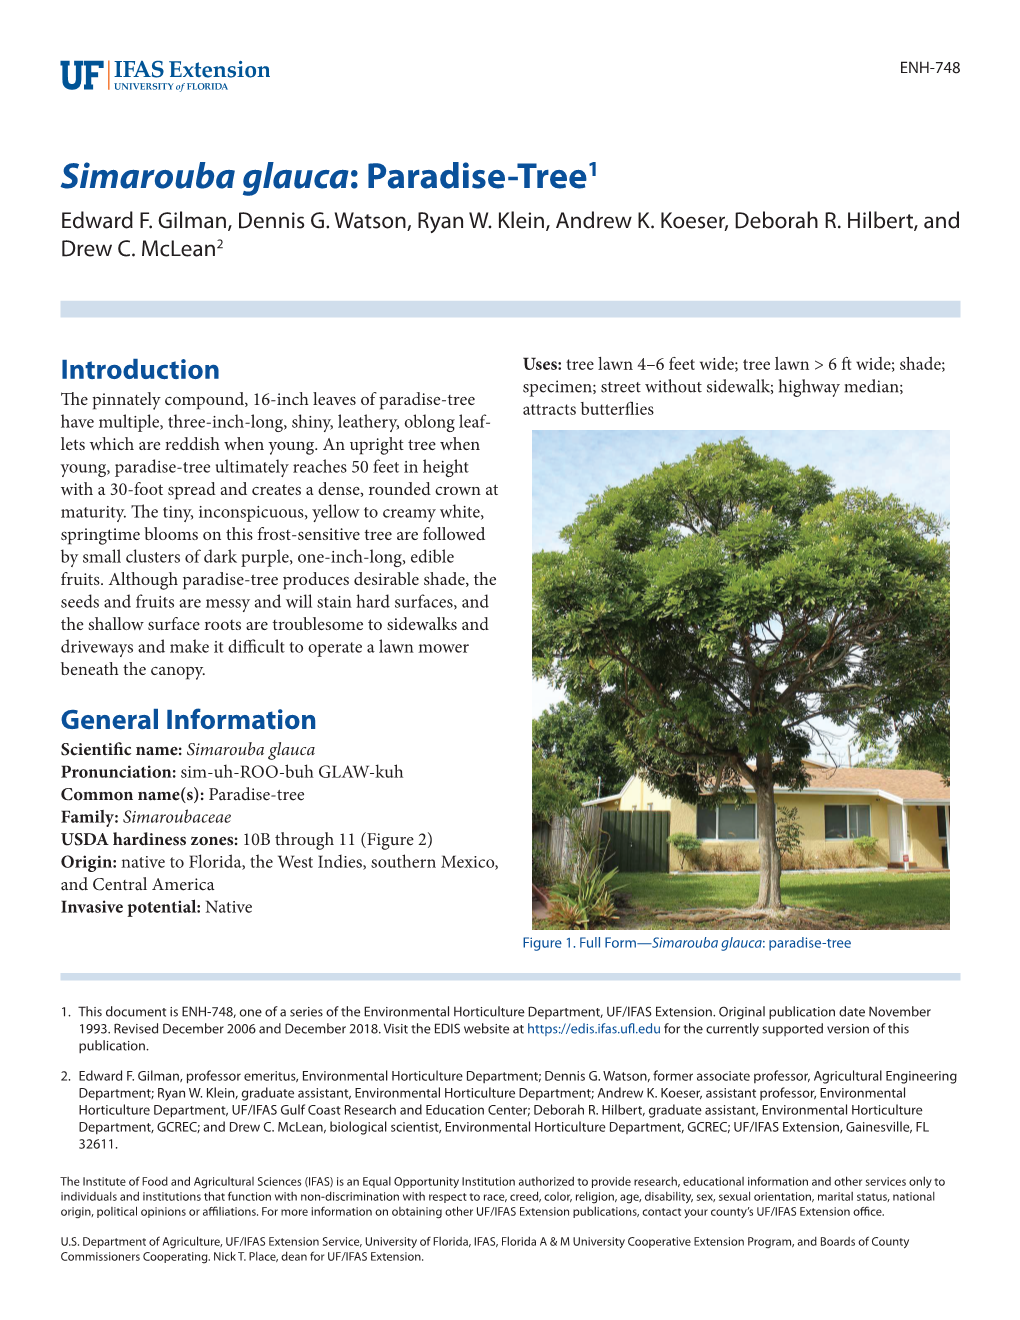 Simarouba Glauca: Paradise-Tree1 Edward F